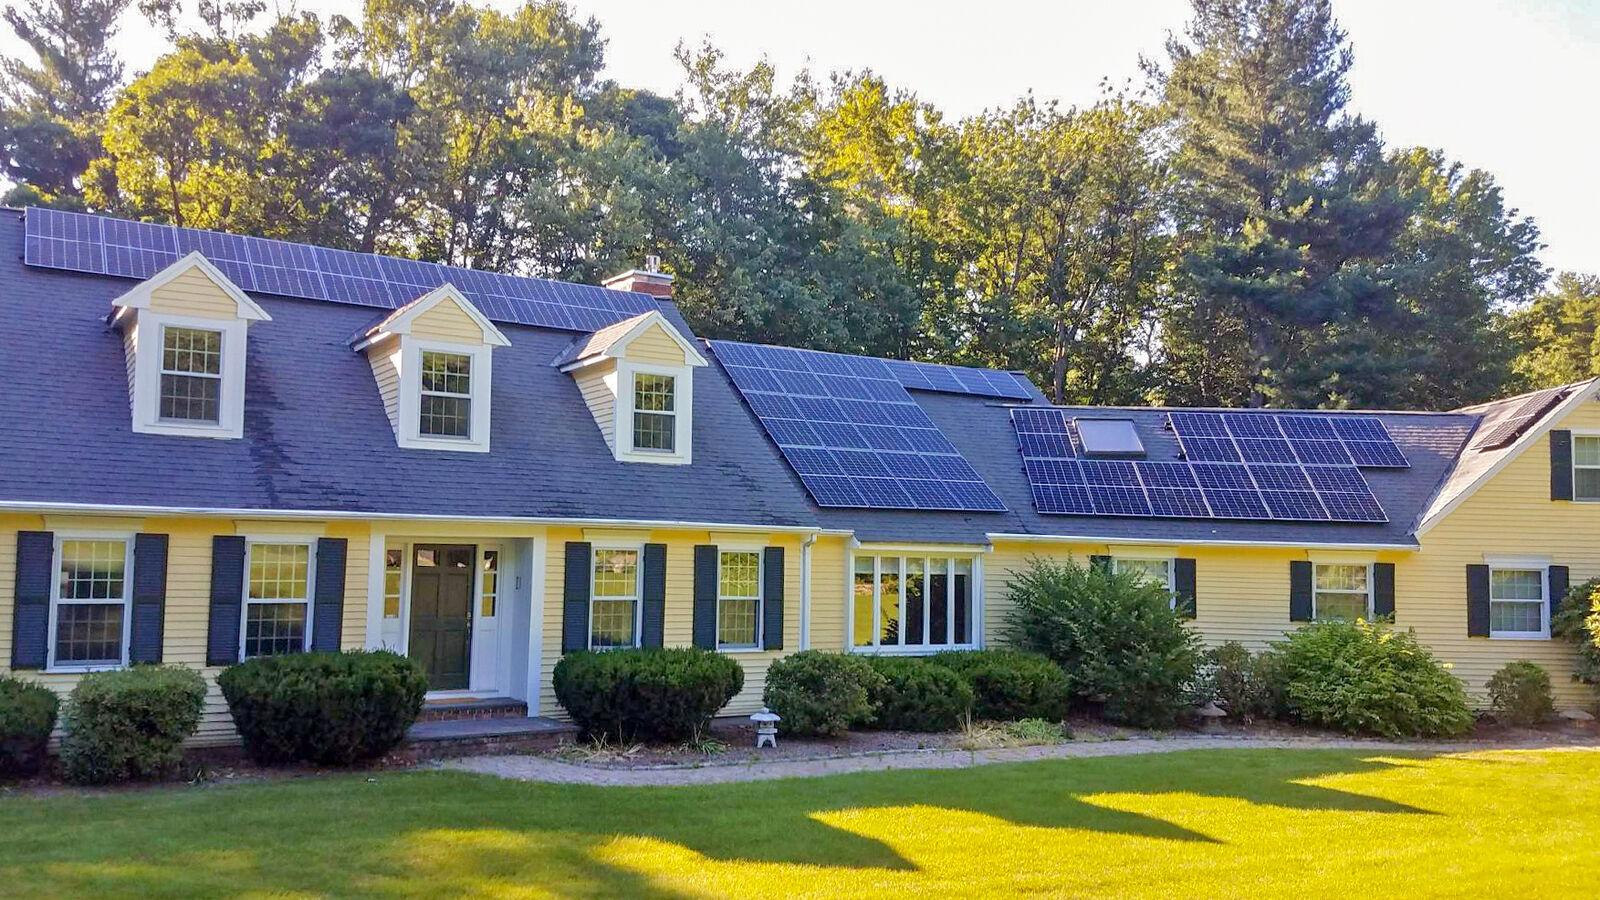 Joe And Laurel's Solar Home In Harvard, MA